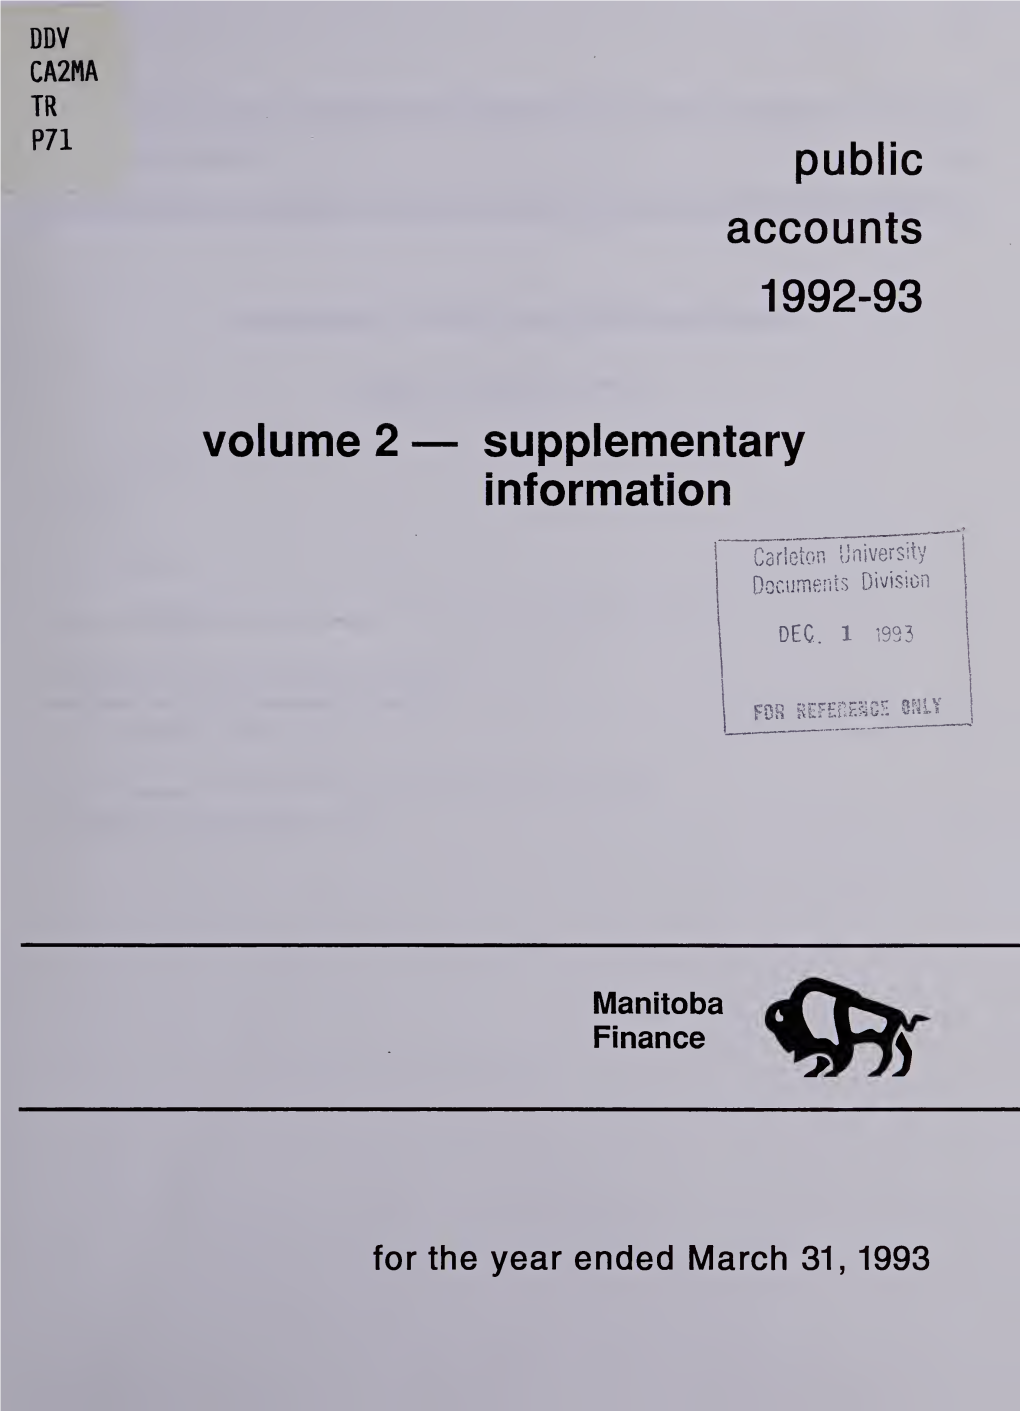 Manitoba Public Accounts, 1992-93. Vol. 2 Supplementary Information